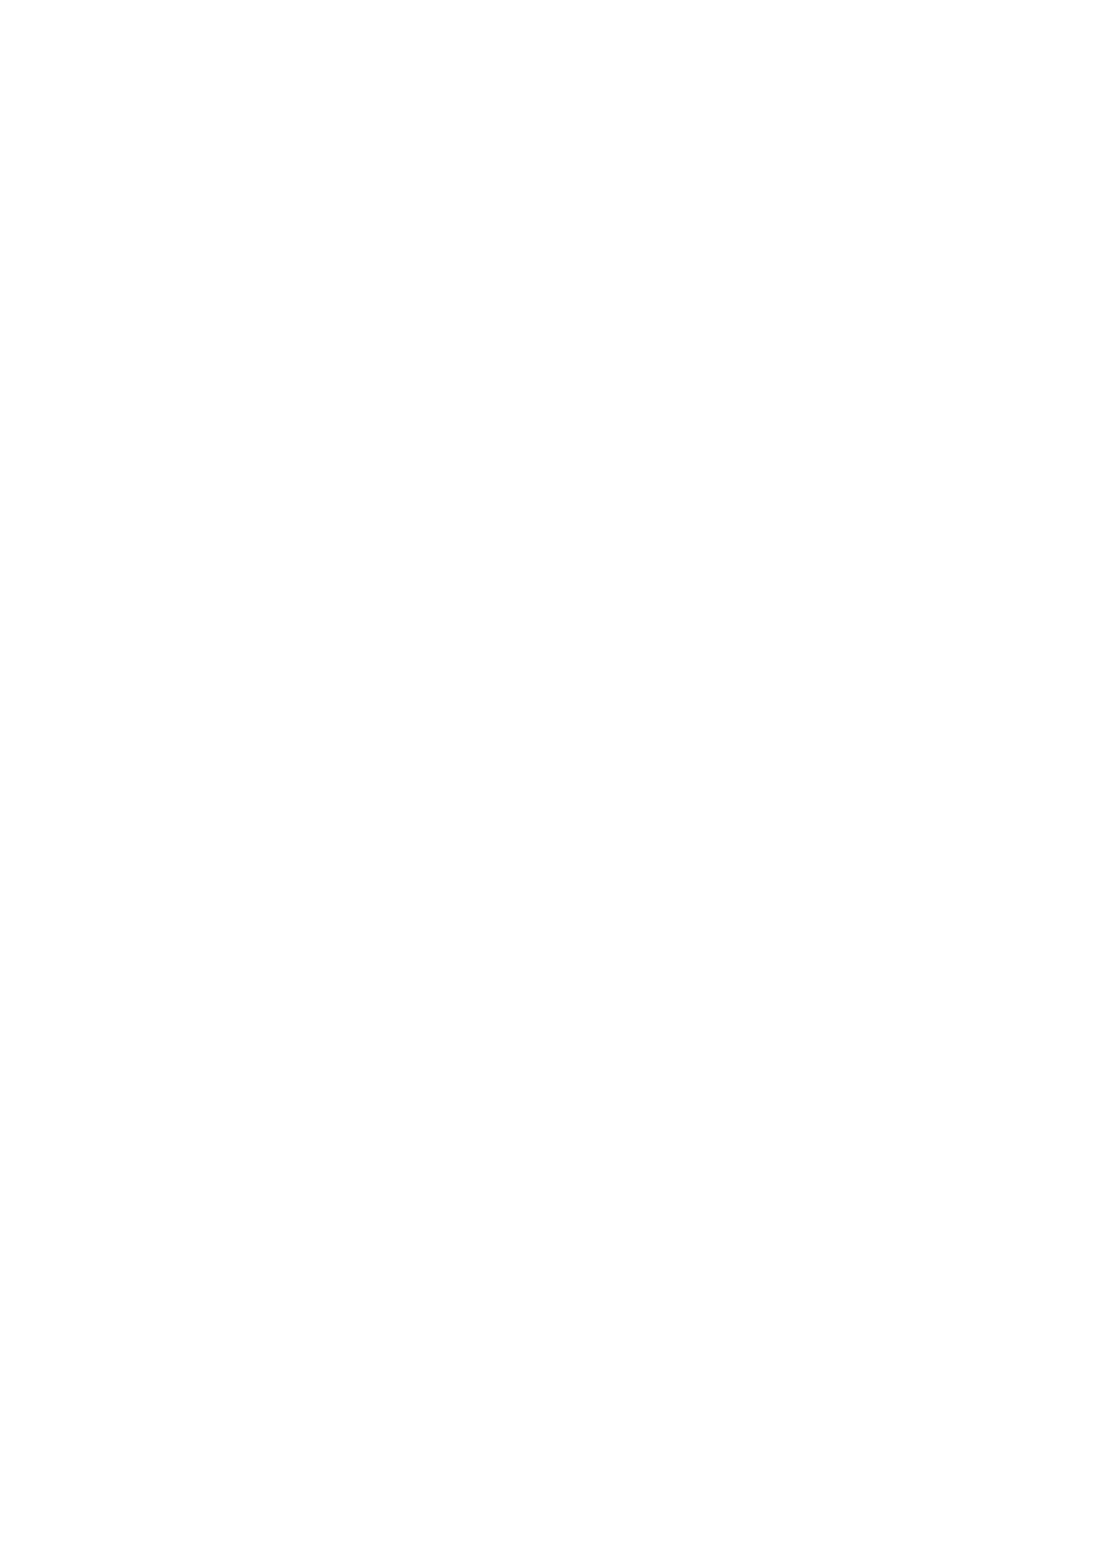 Quantafuel logo pour fonds sombres (PNG transparent)